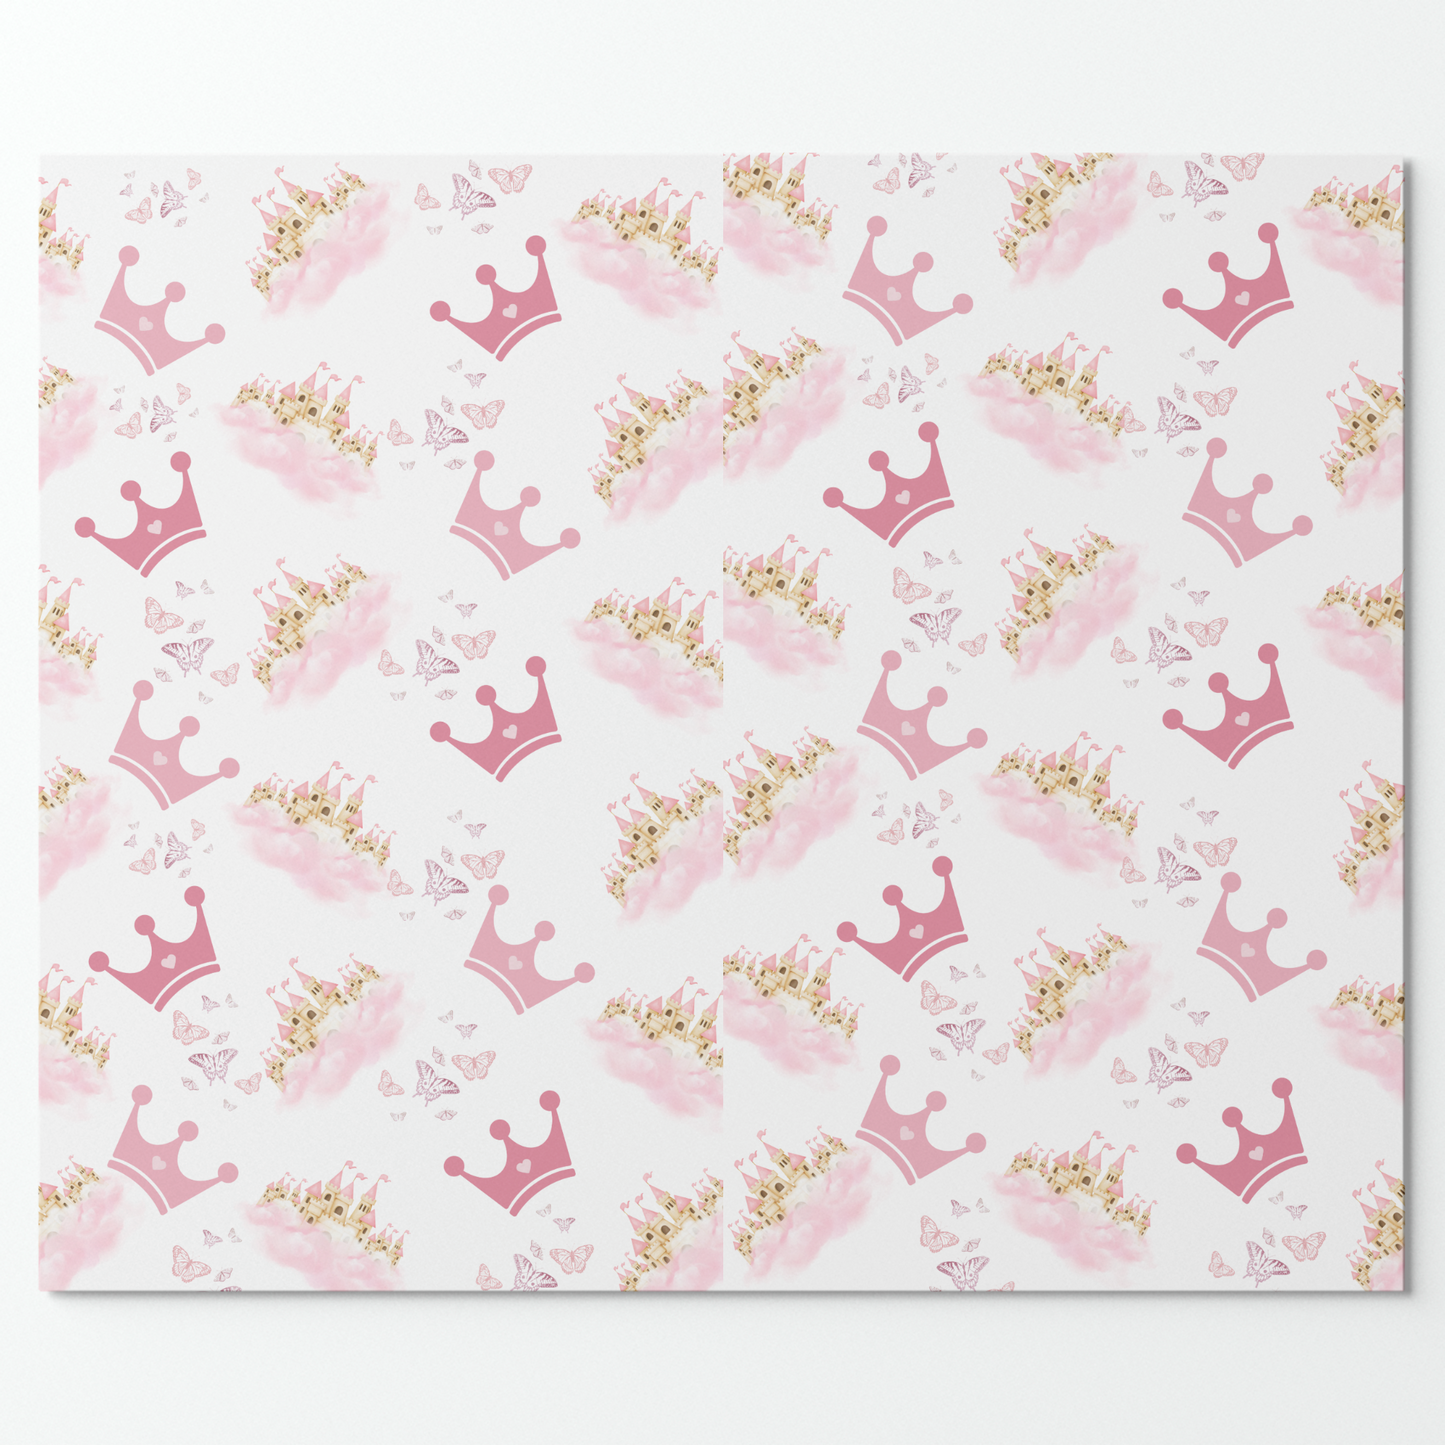 Pink Princess Castle Crown Royal Wrapping Paper Design (DIGITAL DOWNLOAD)